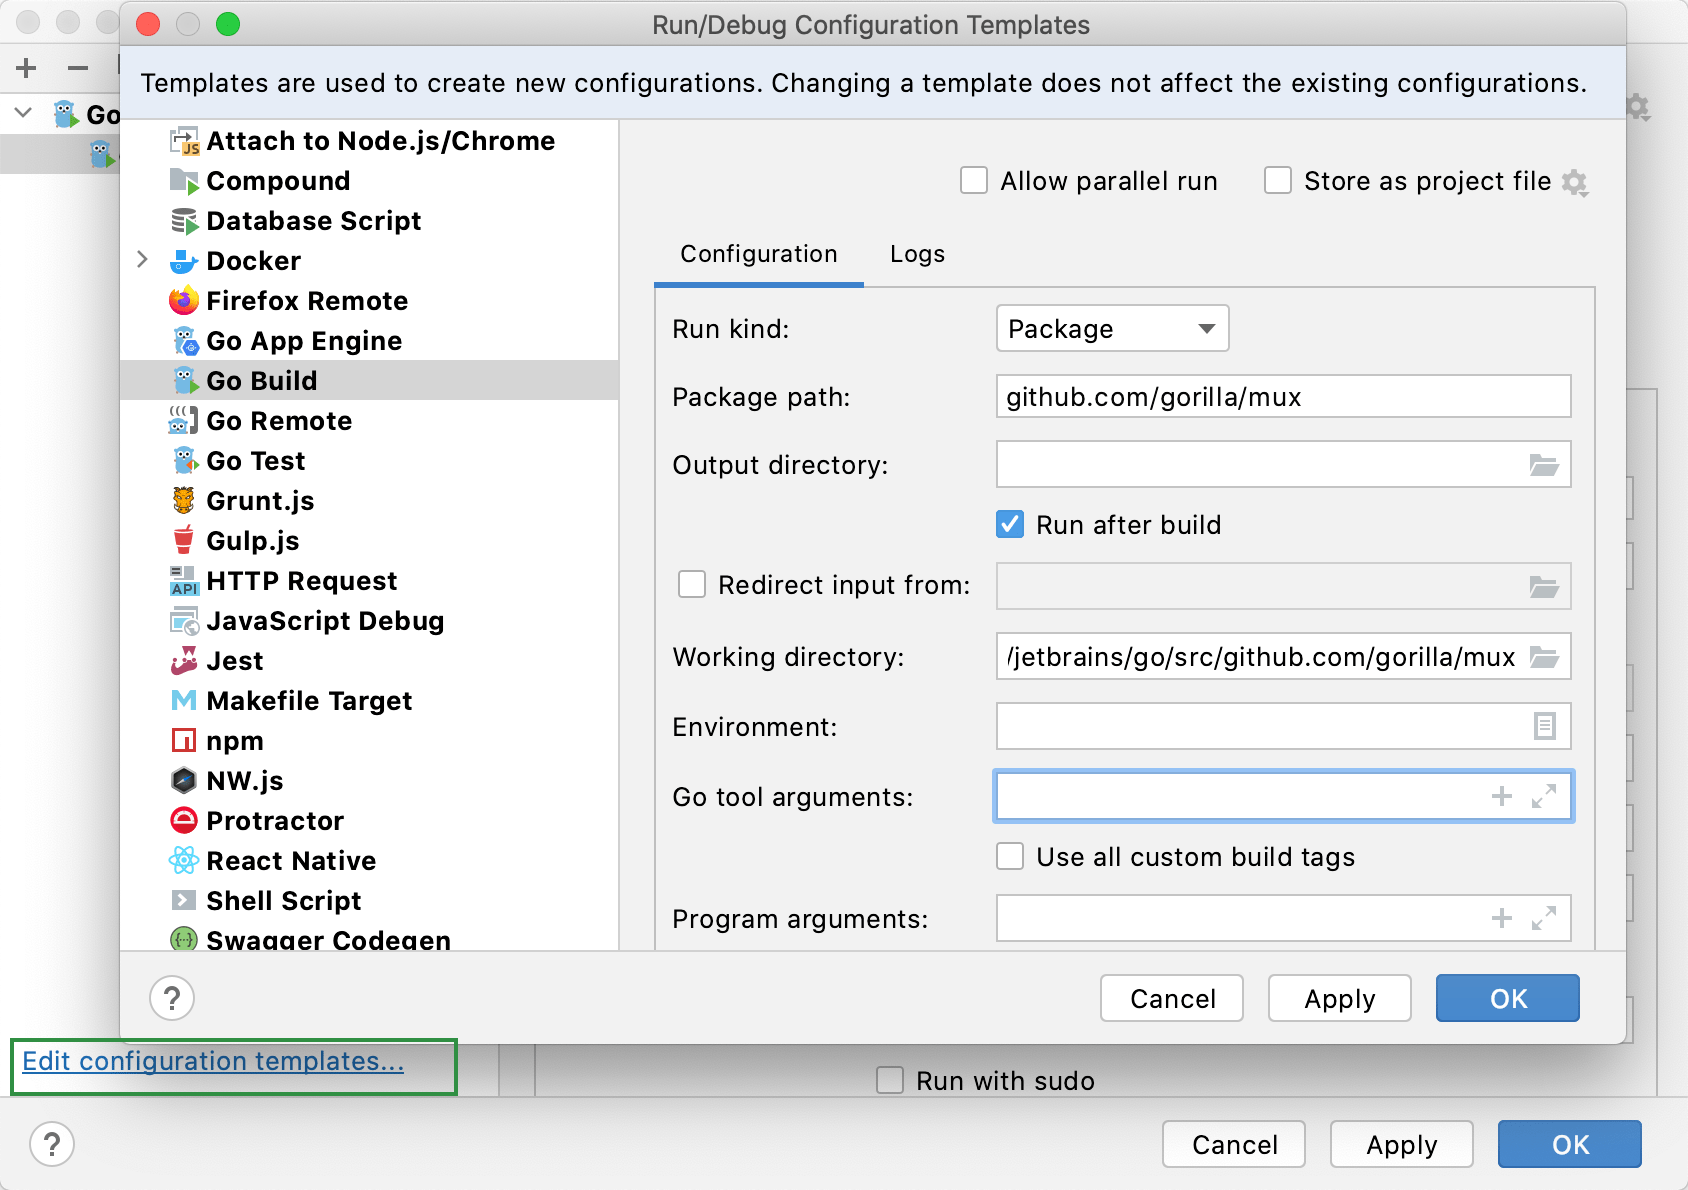 Changing Run/debug templates